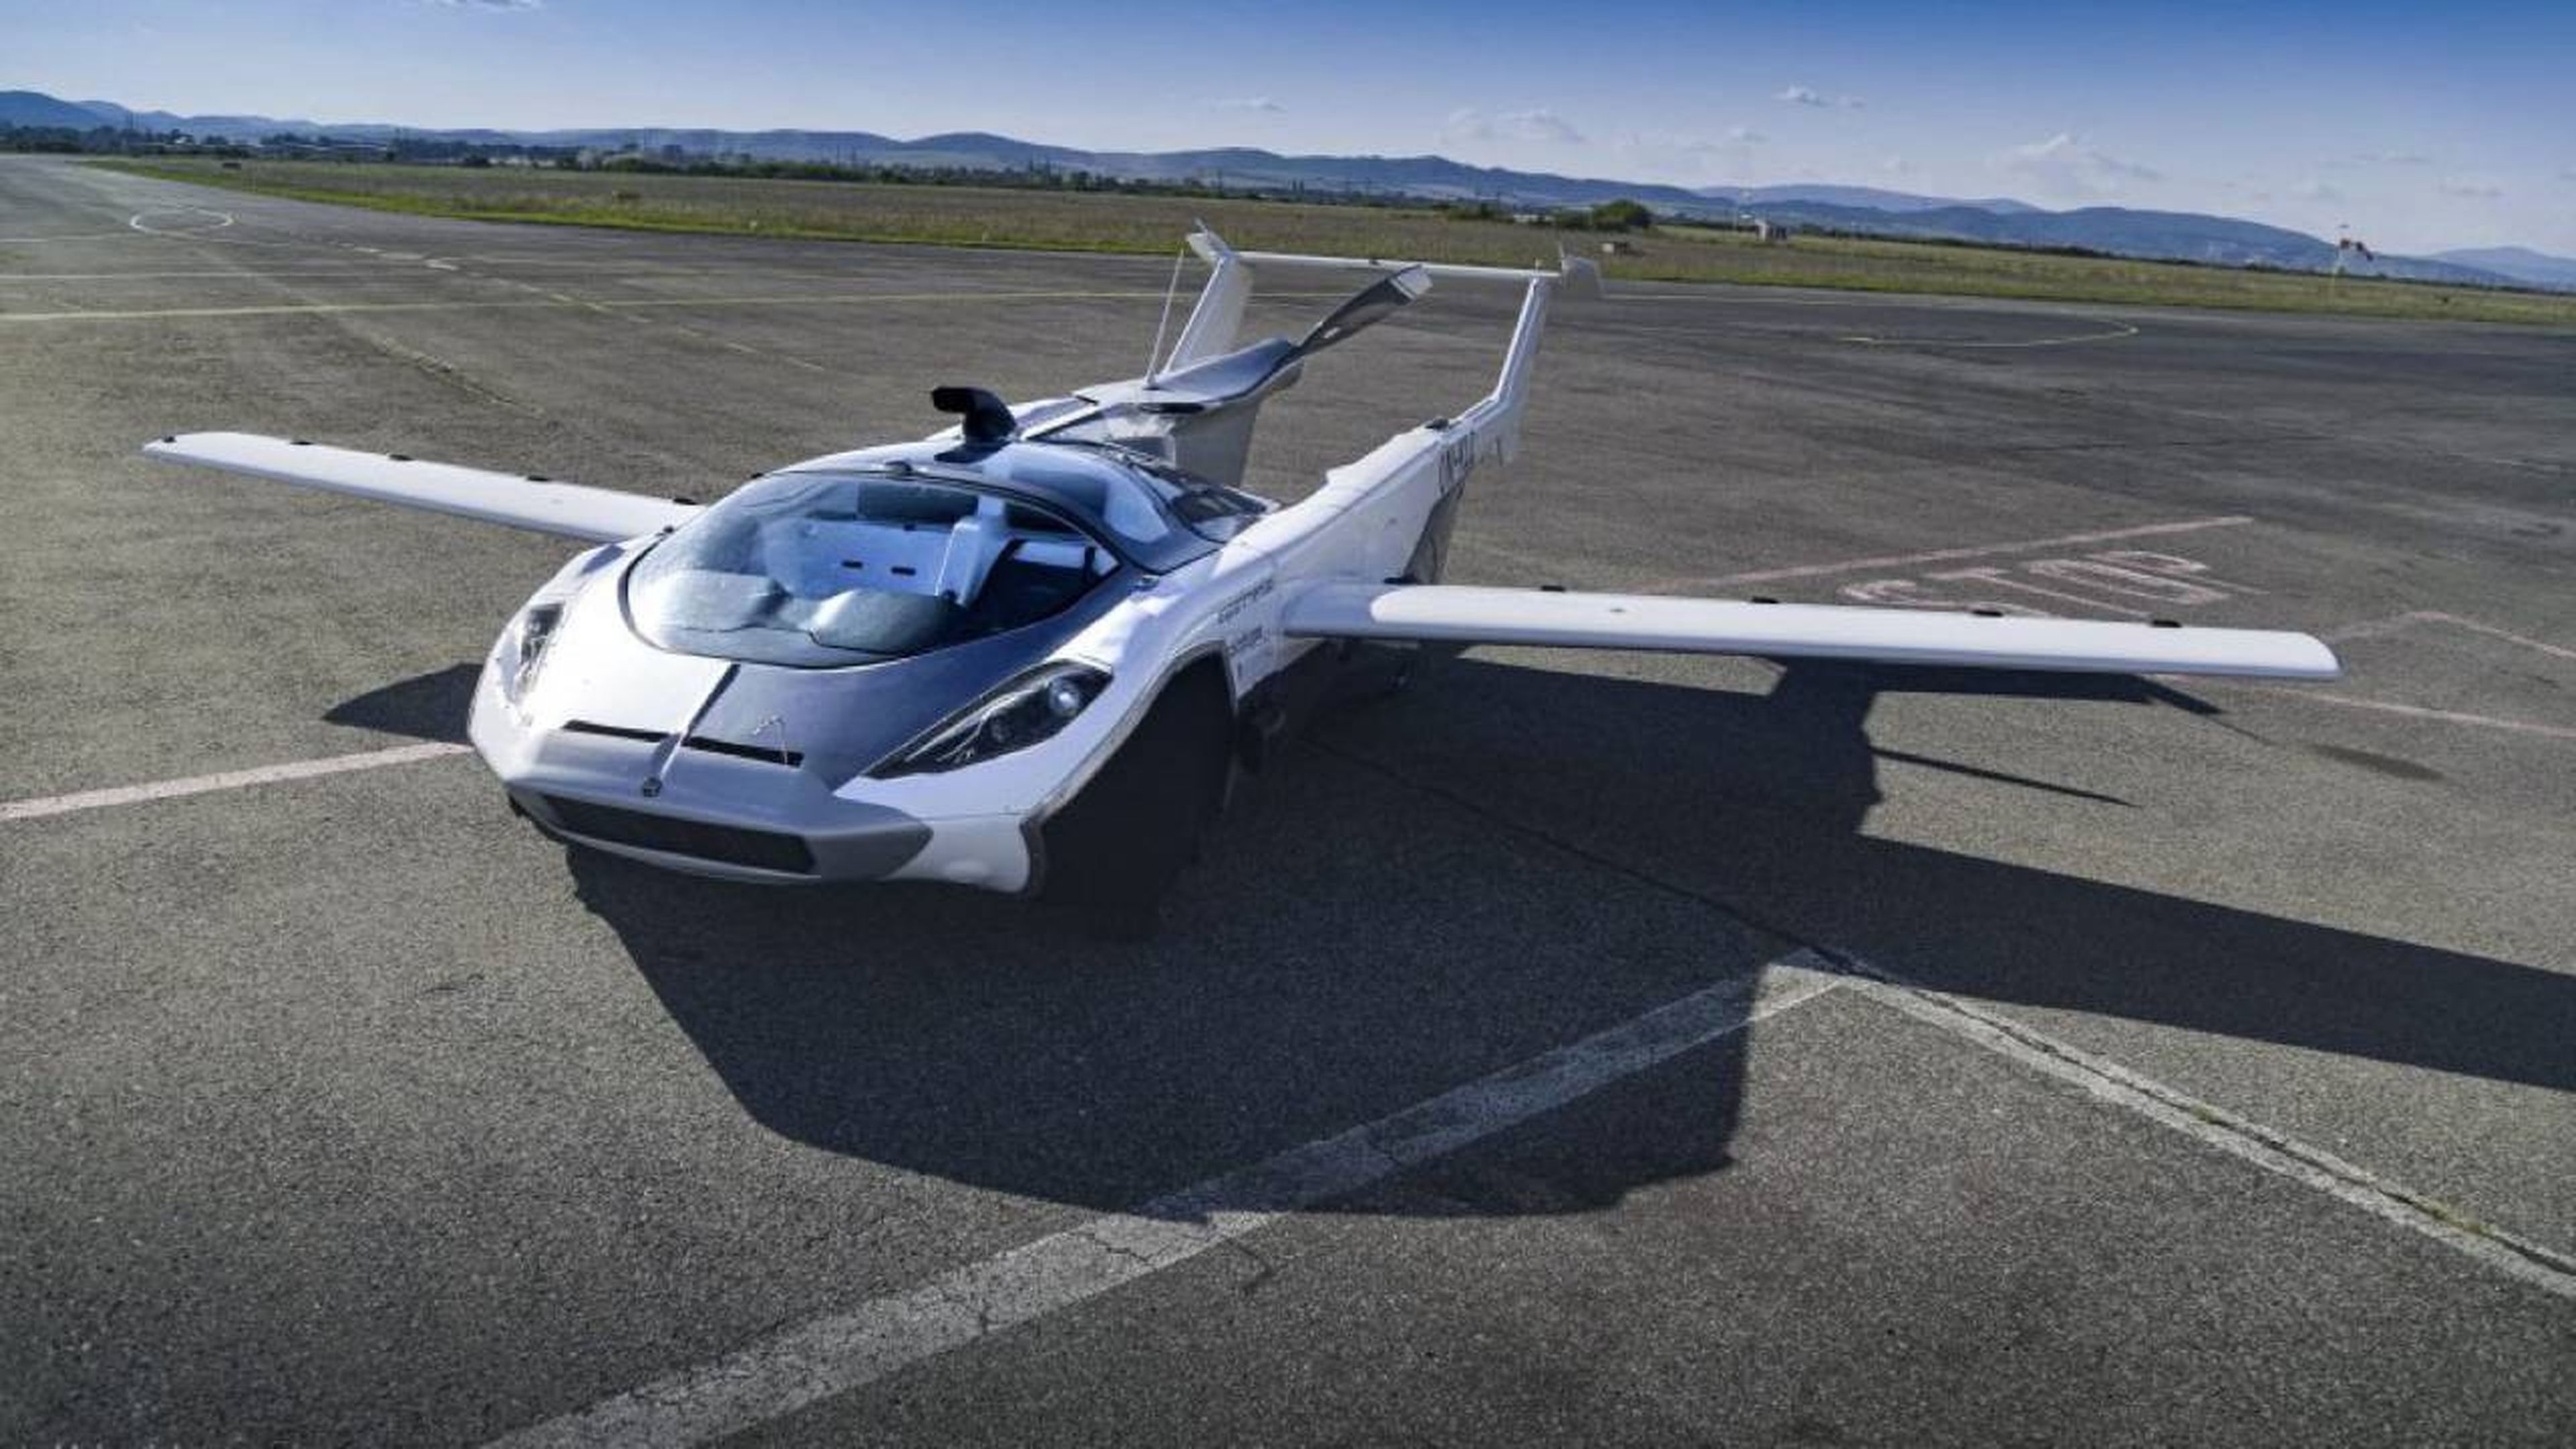 Modelo de Air Car, coche volador desarrollado por Klein Vision.